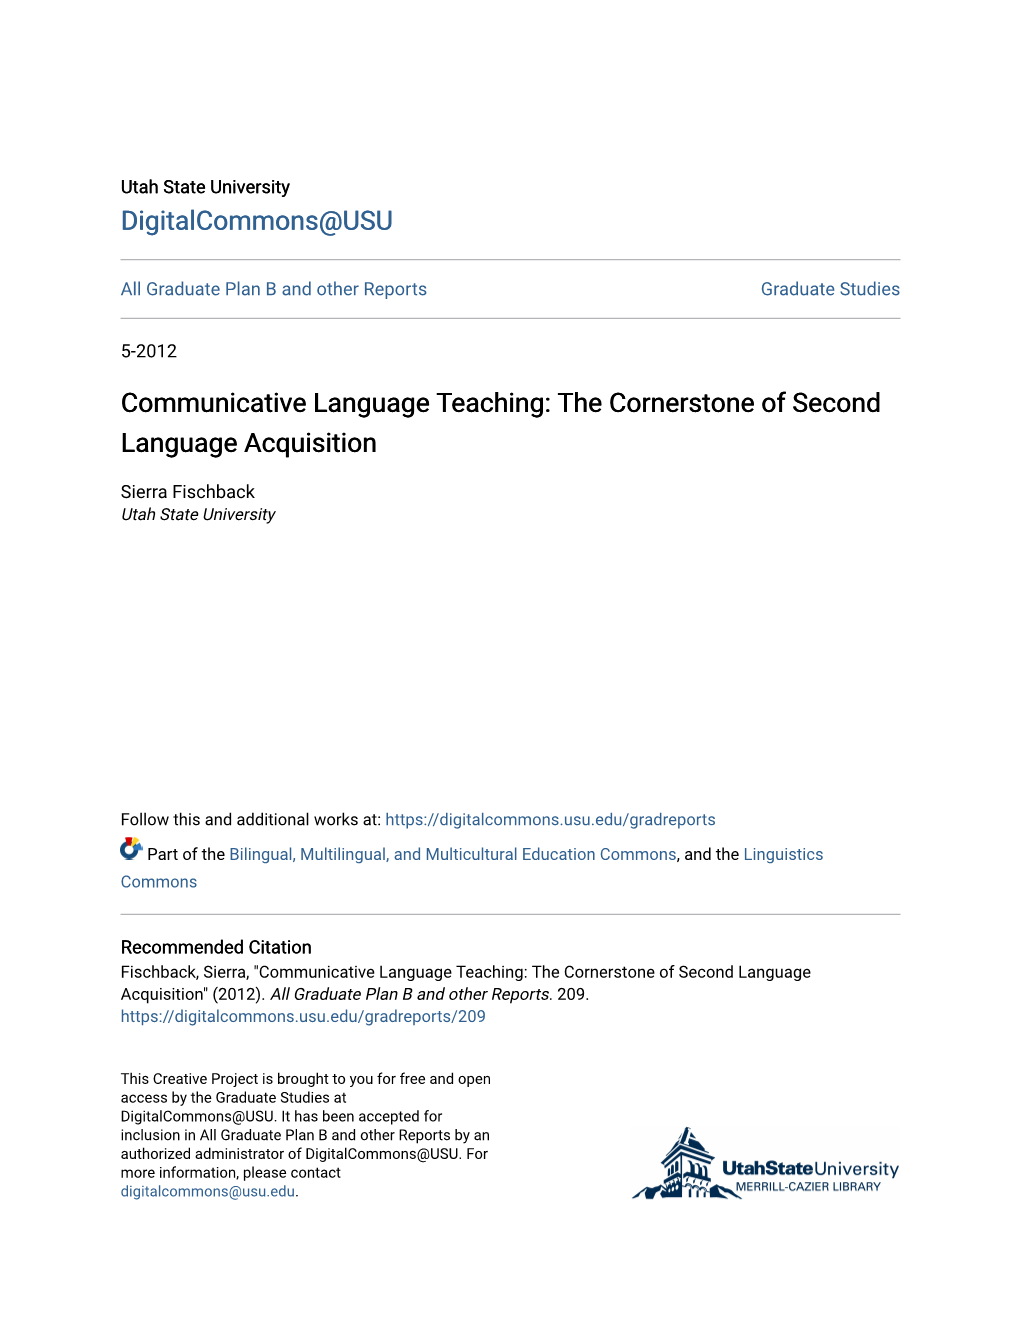 Communicative Language Teaching: the Cornerstone of Second Language Acquisition